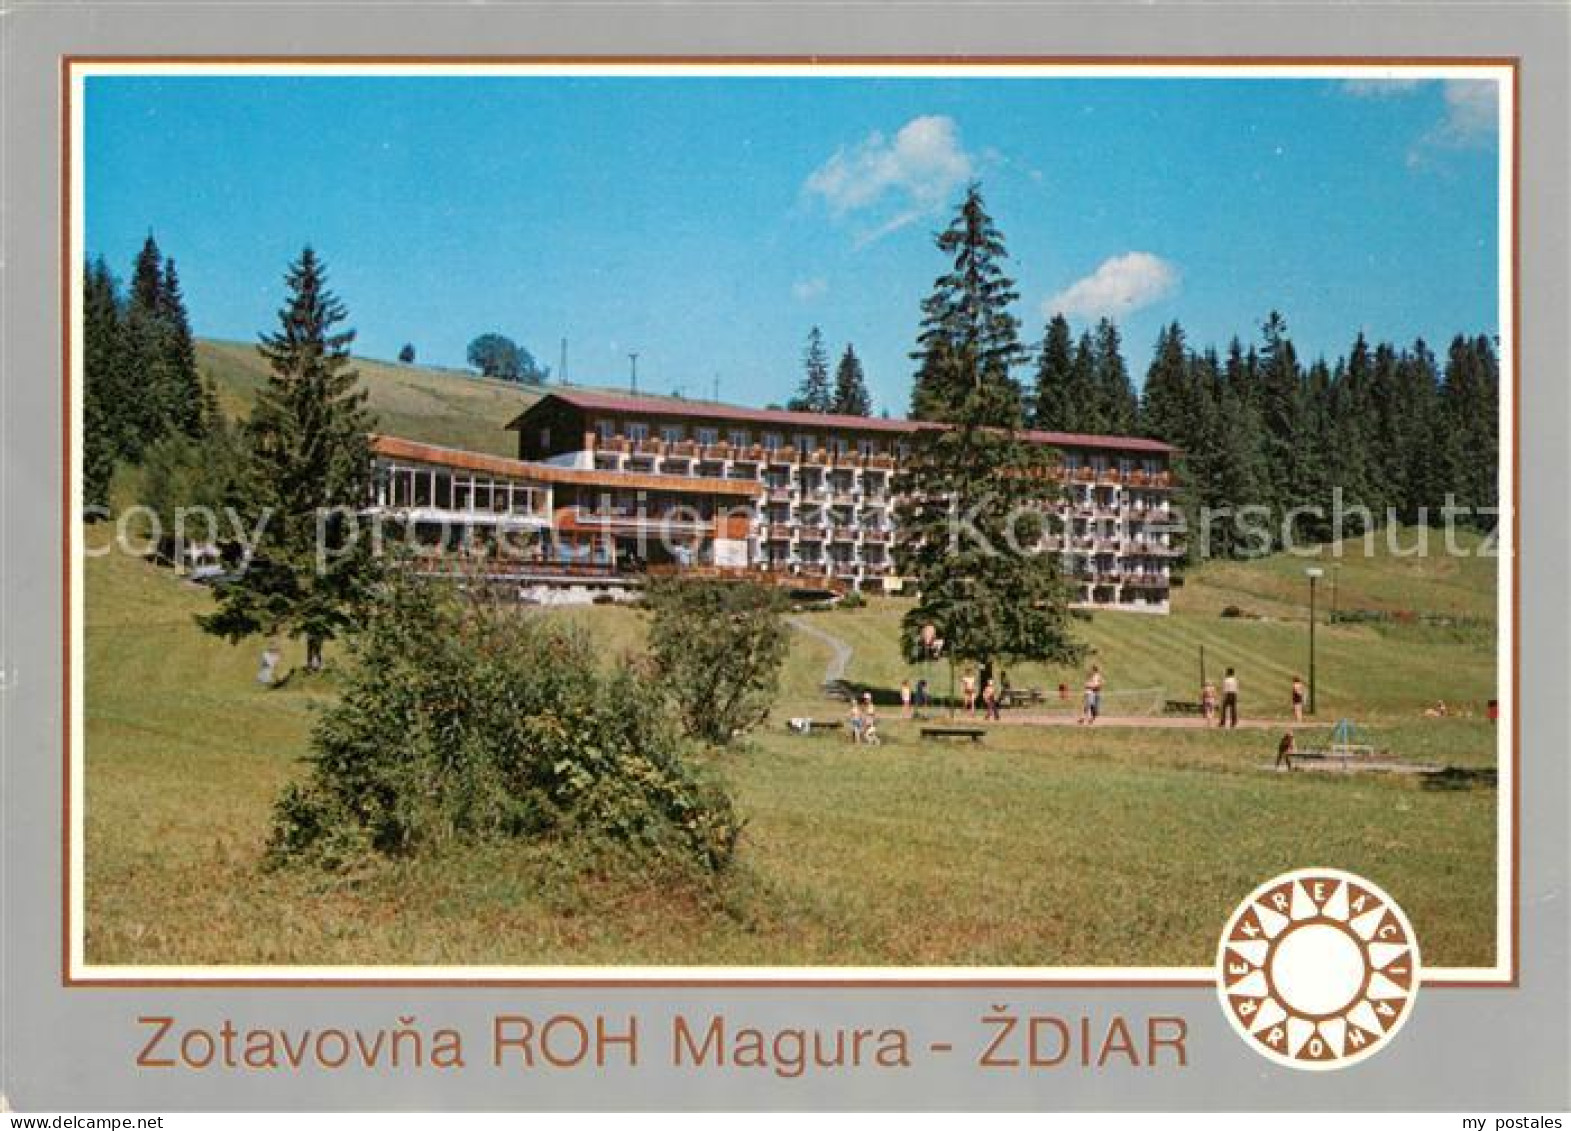 73062464 Zdiar Zotavovna ROH Magura Zdiar - Slowakei